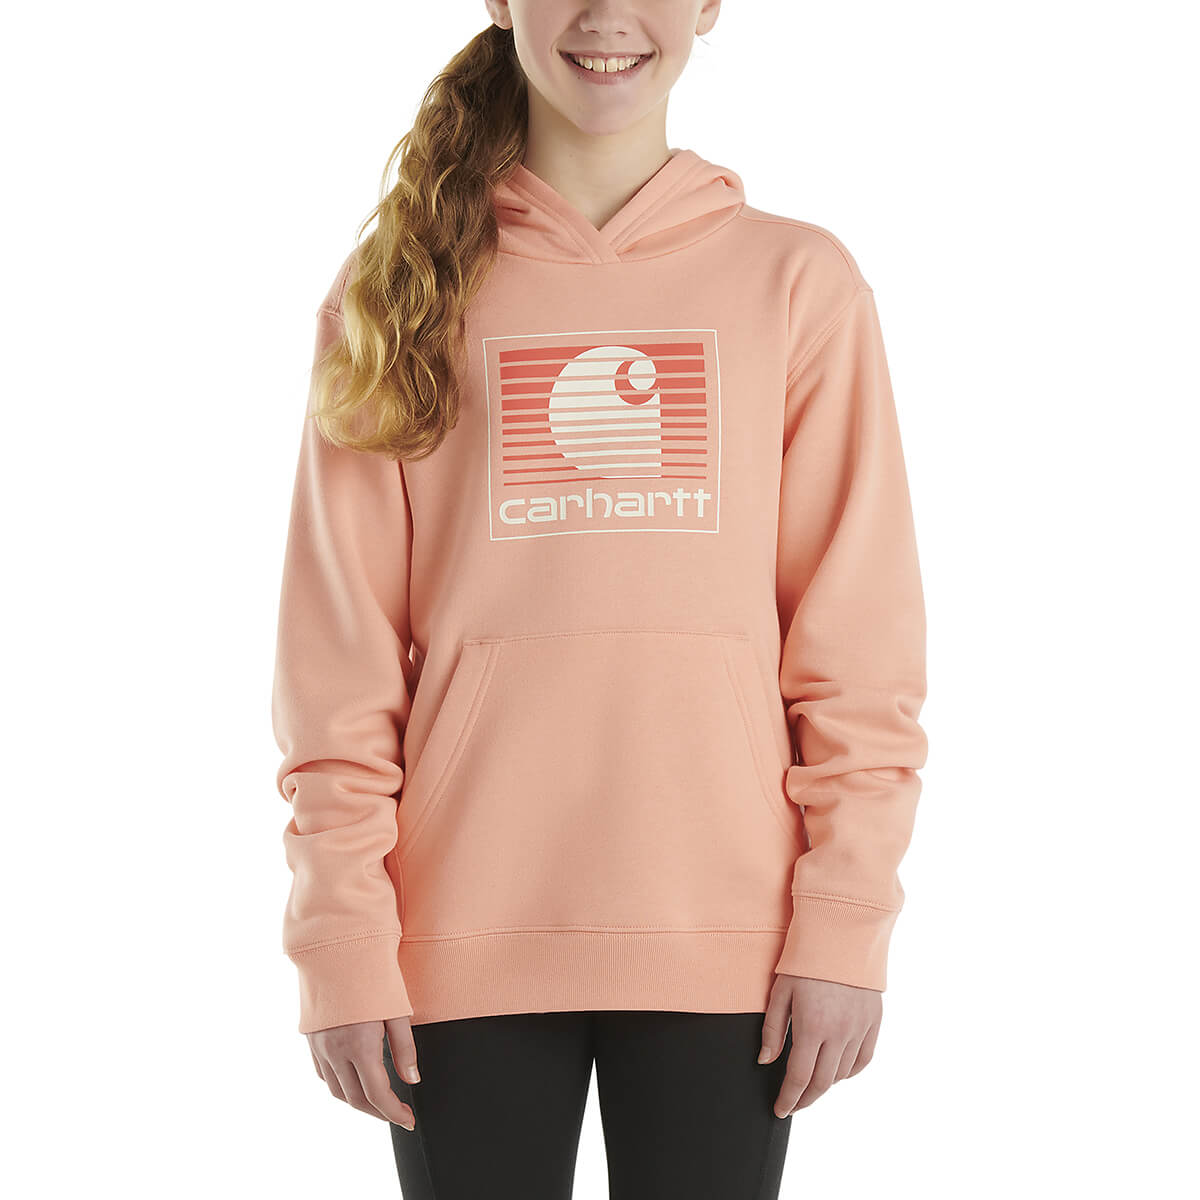 Carhartt Girl's Long Sleeve Graphic Sweatshirt CA9985 - Pink